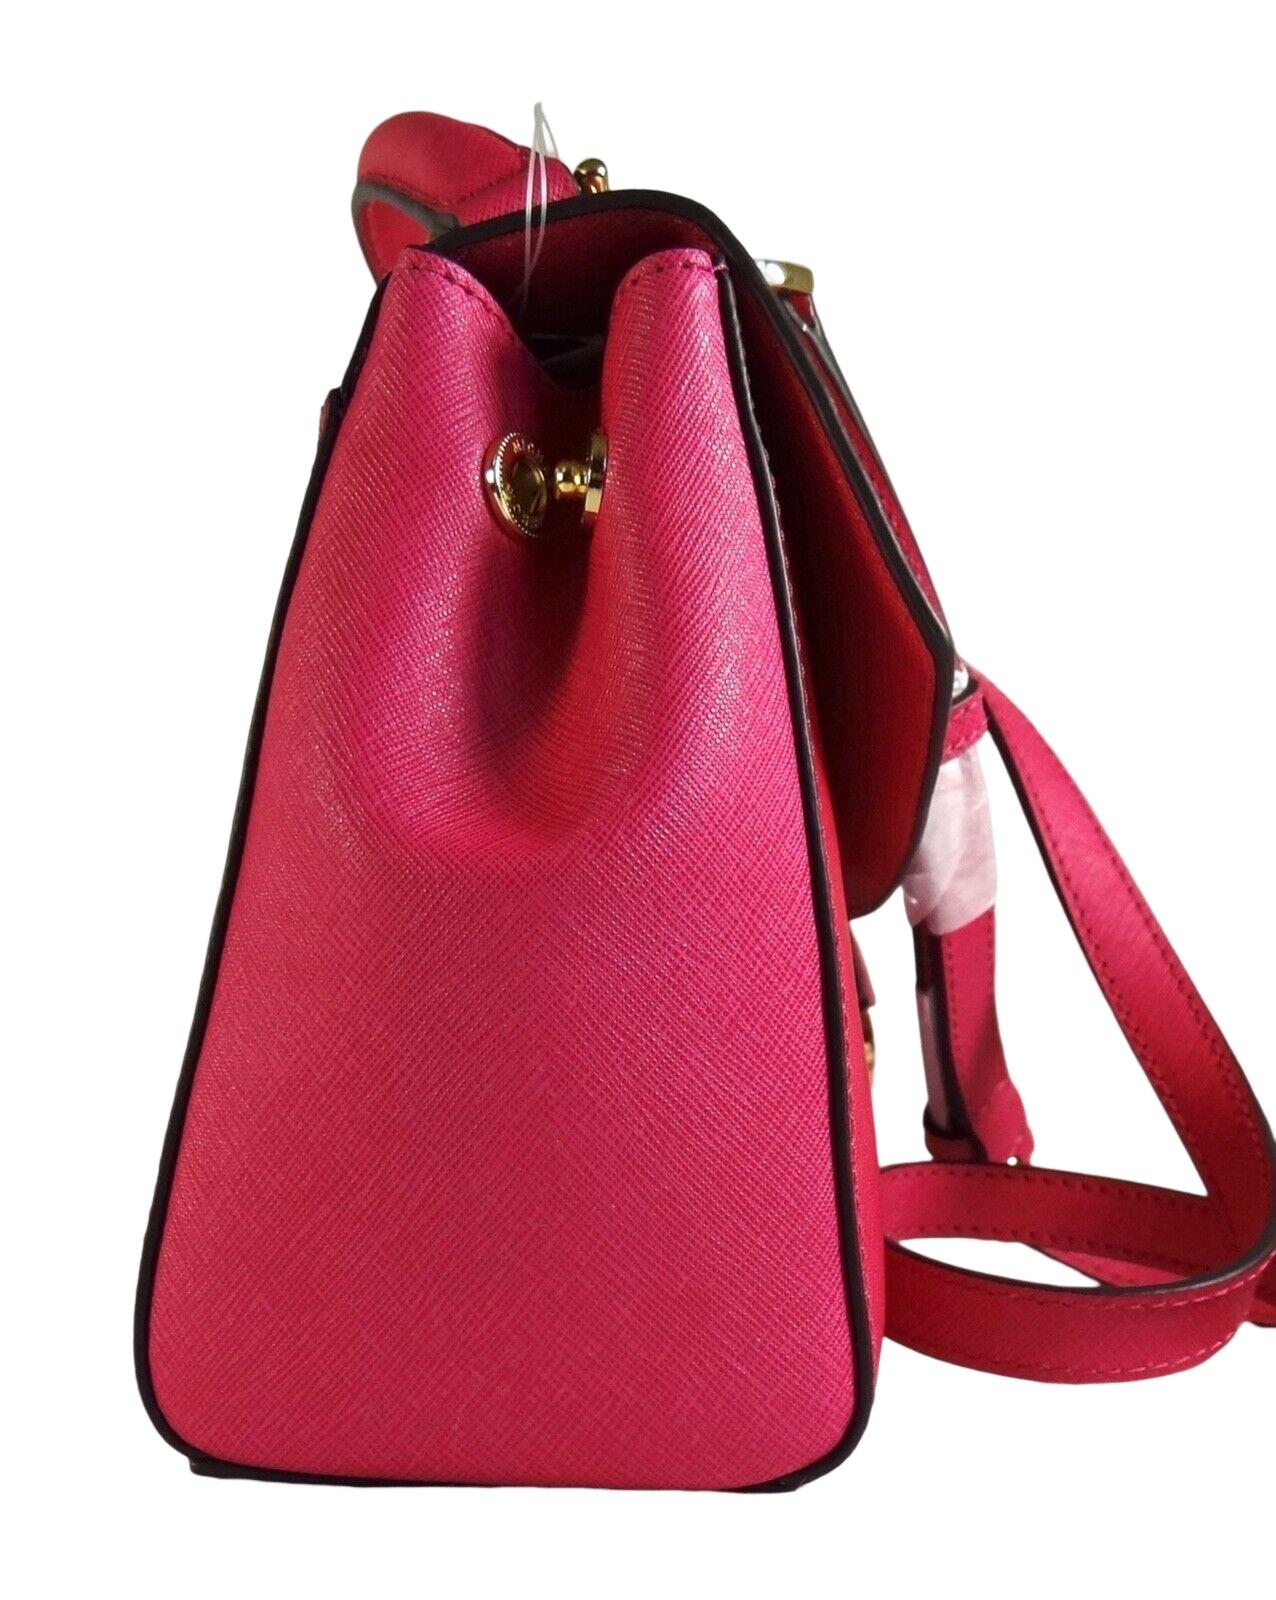 Ava Medium Leather Satchel $298  Leather satchel handbags, Michael kors ava,  Michael kors